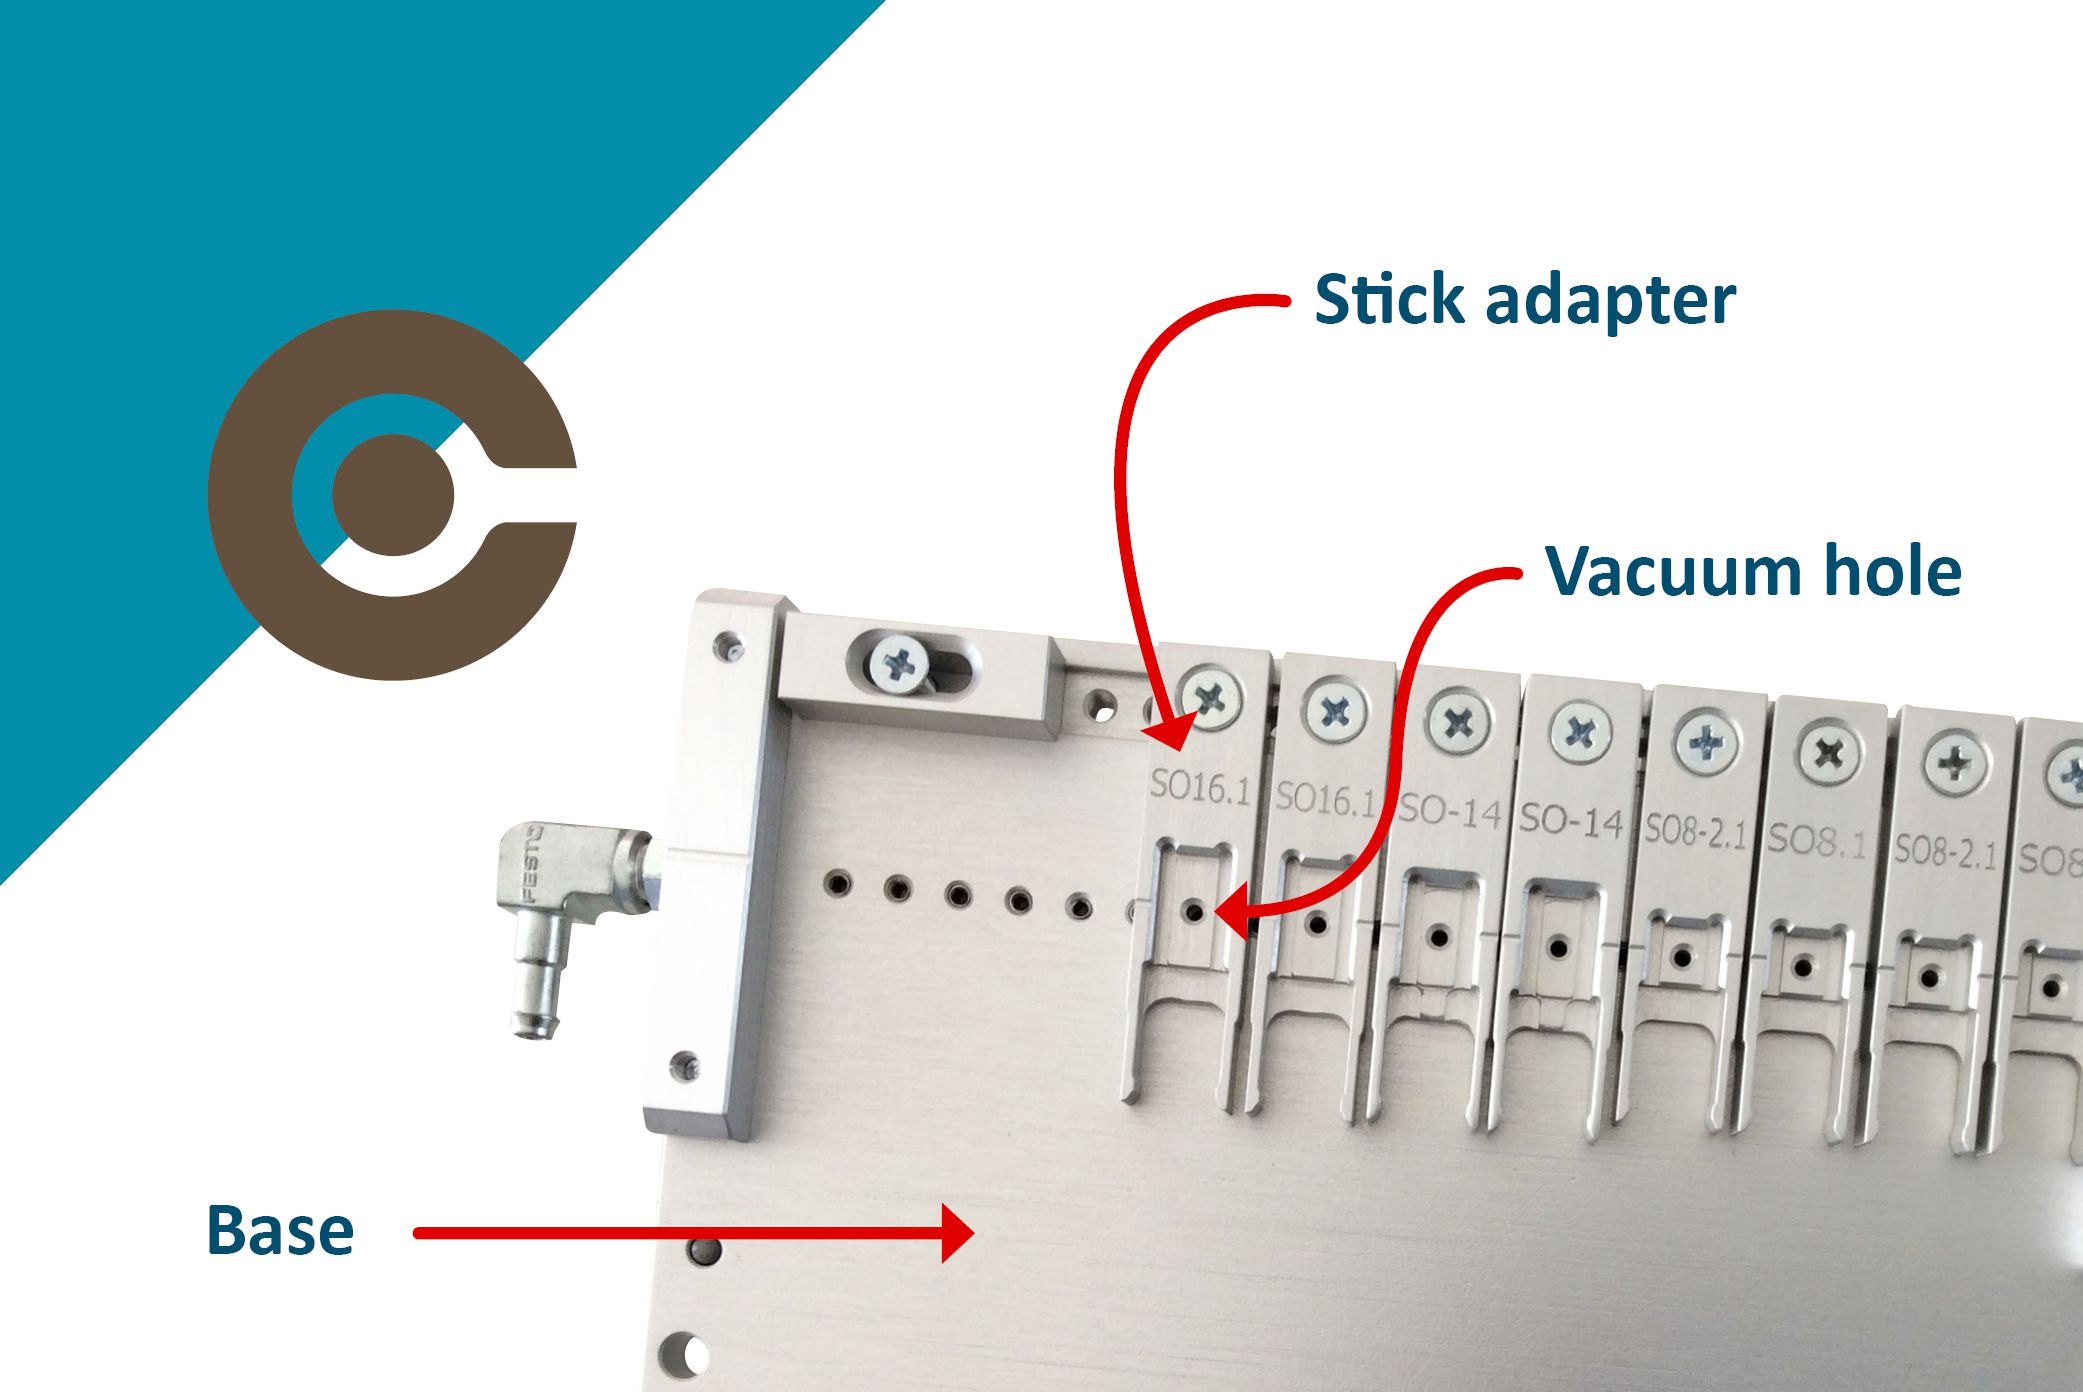 YAMAHA stick adapters on base of stick feeder base with explanations